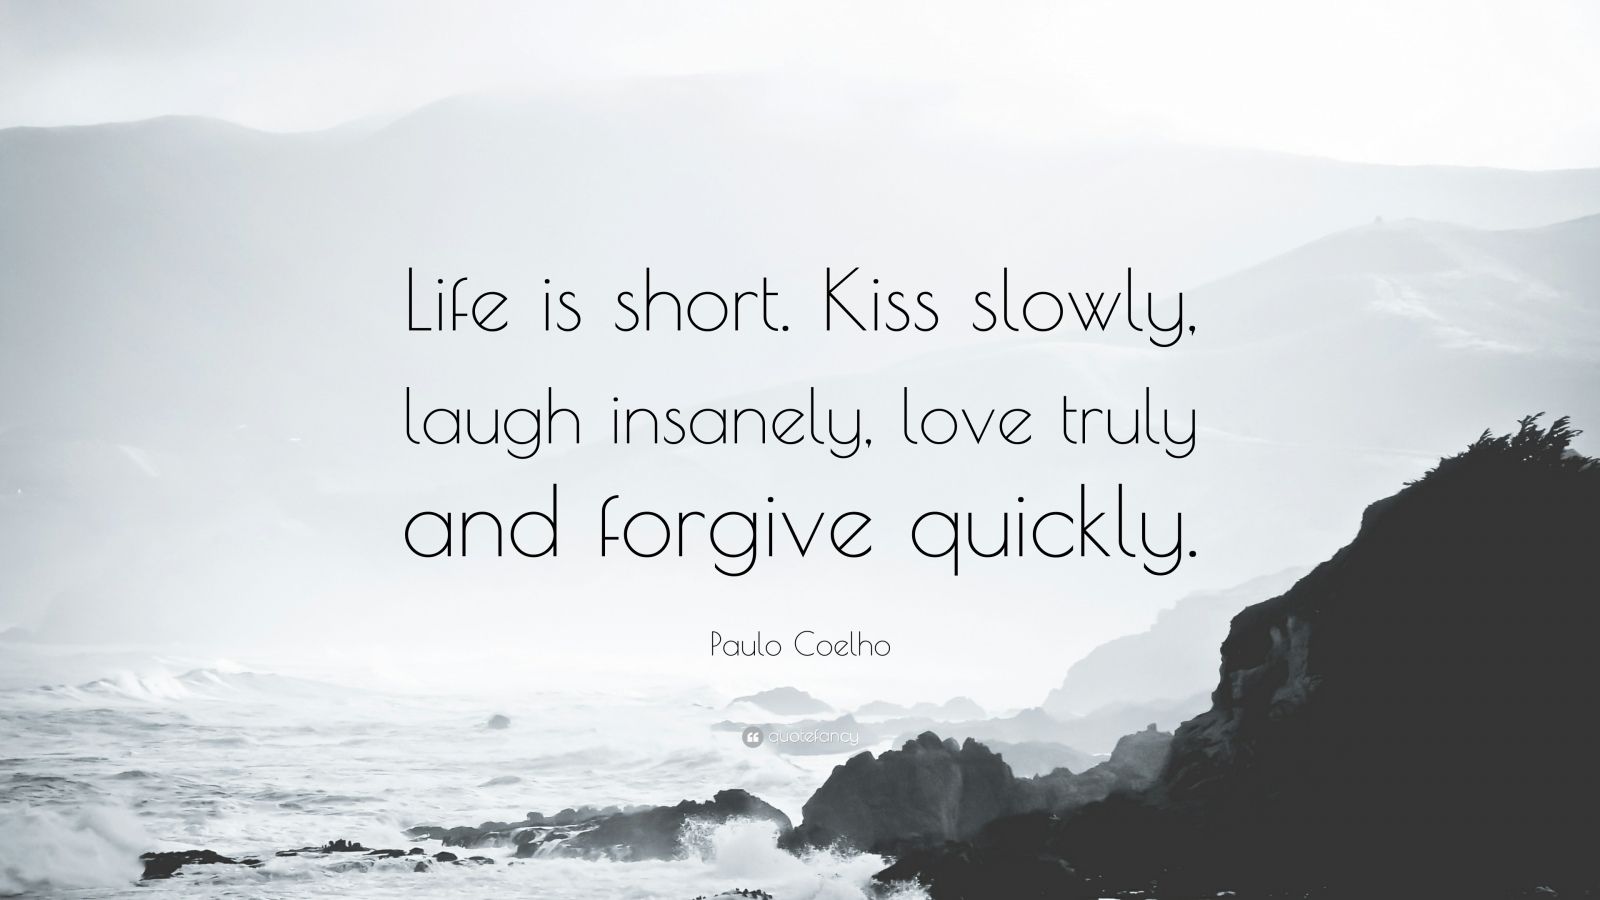 Paulo Coelho Quote “Life is short Kiss slowly laugh insanely love